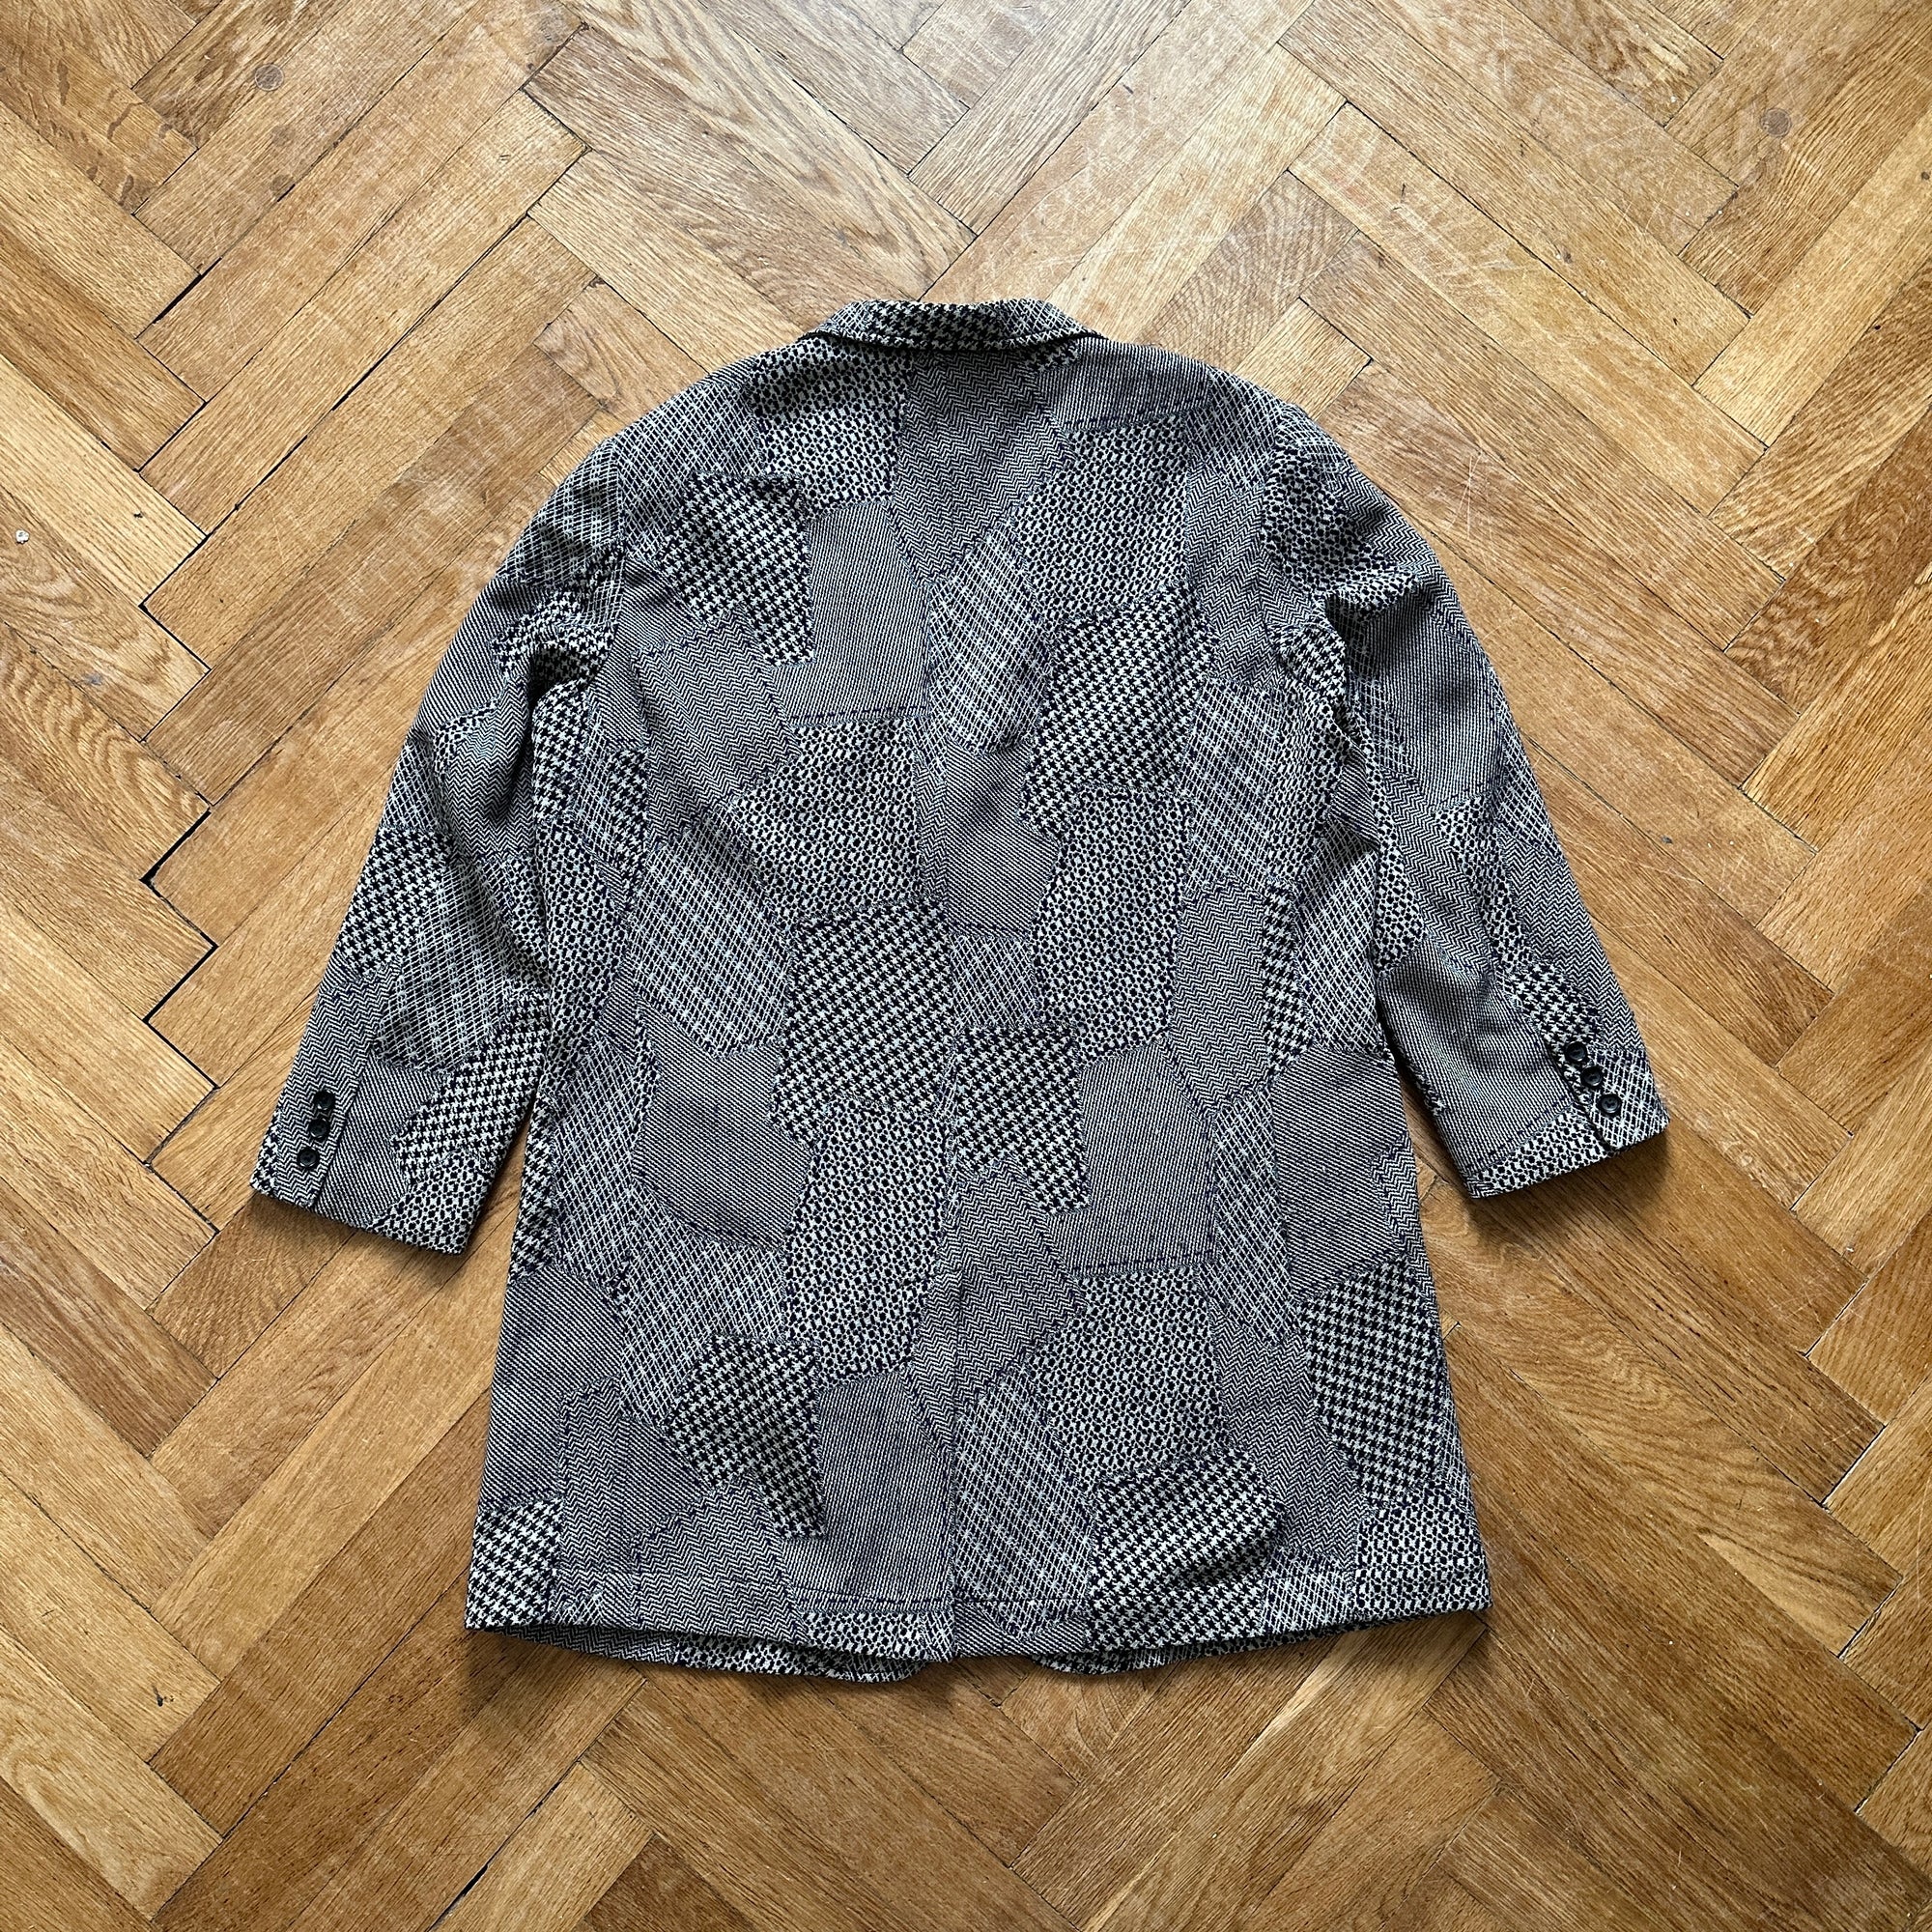 Yohji Yamamoto Pour Homme FW10 Patchwork Wool Jacket